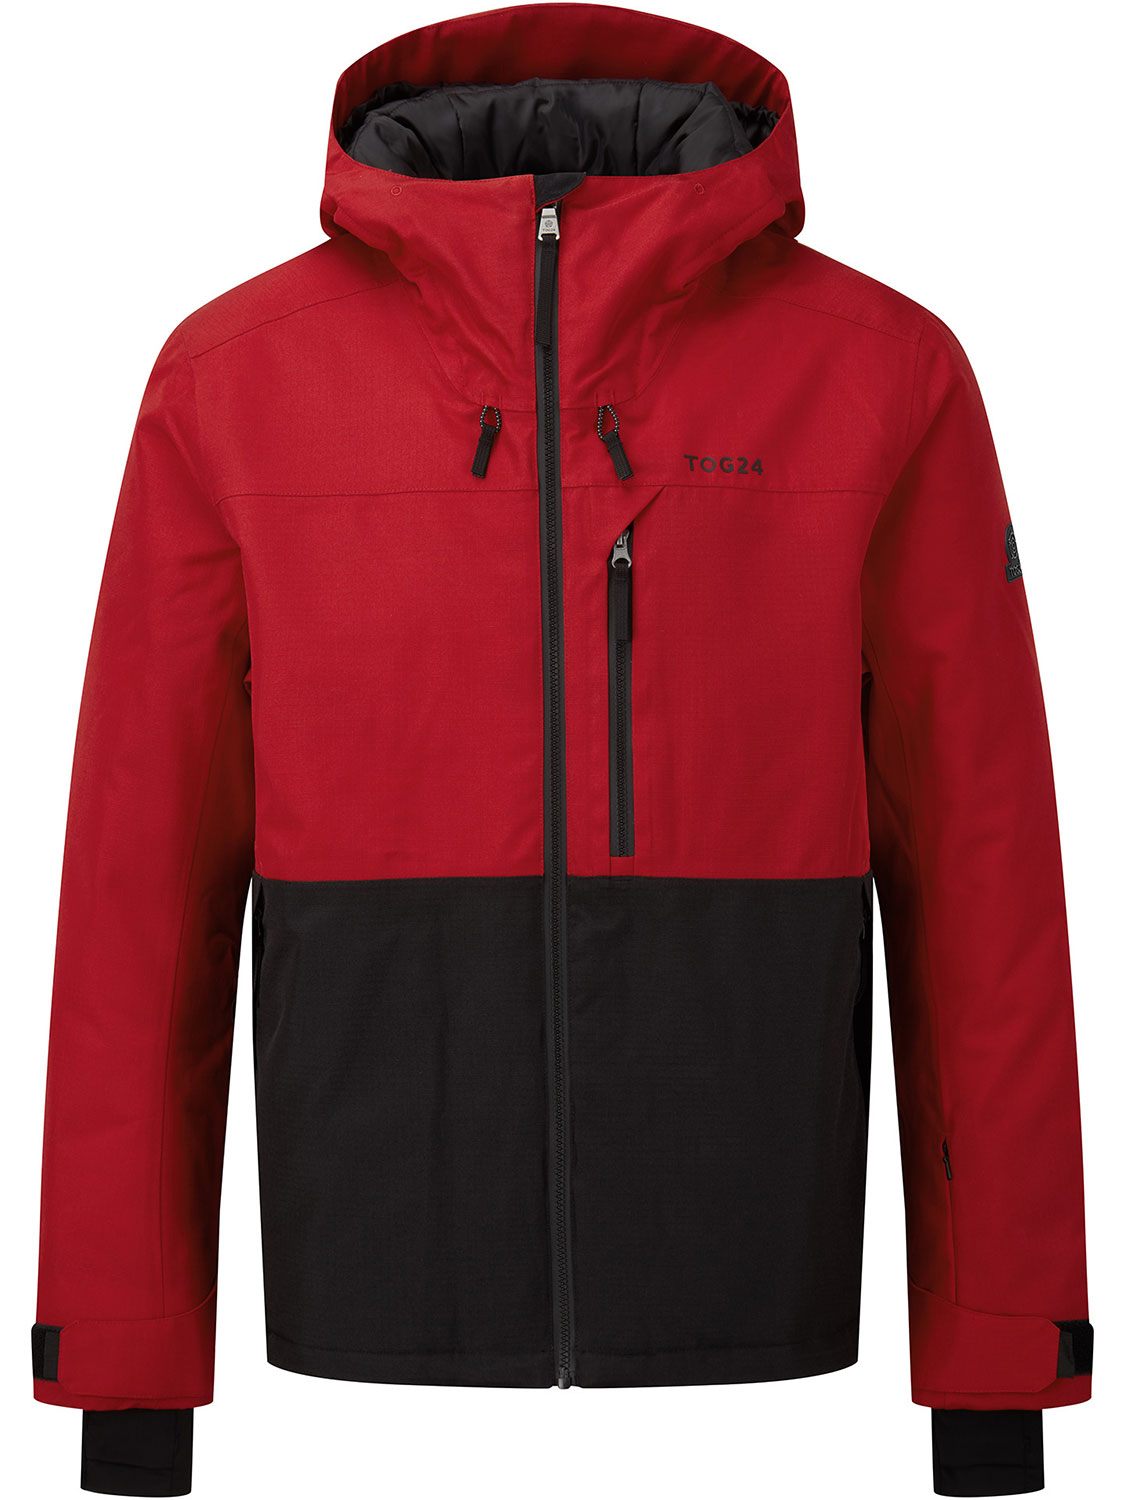 Hail Ski Jacket - Size: Small Men’s Red Tog24